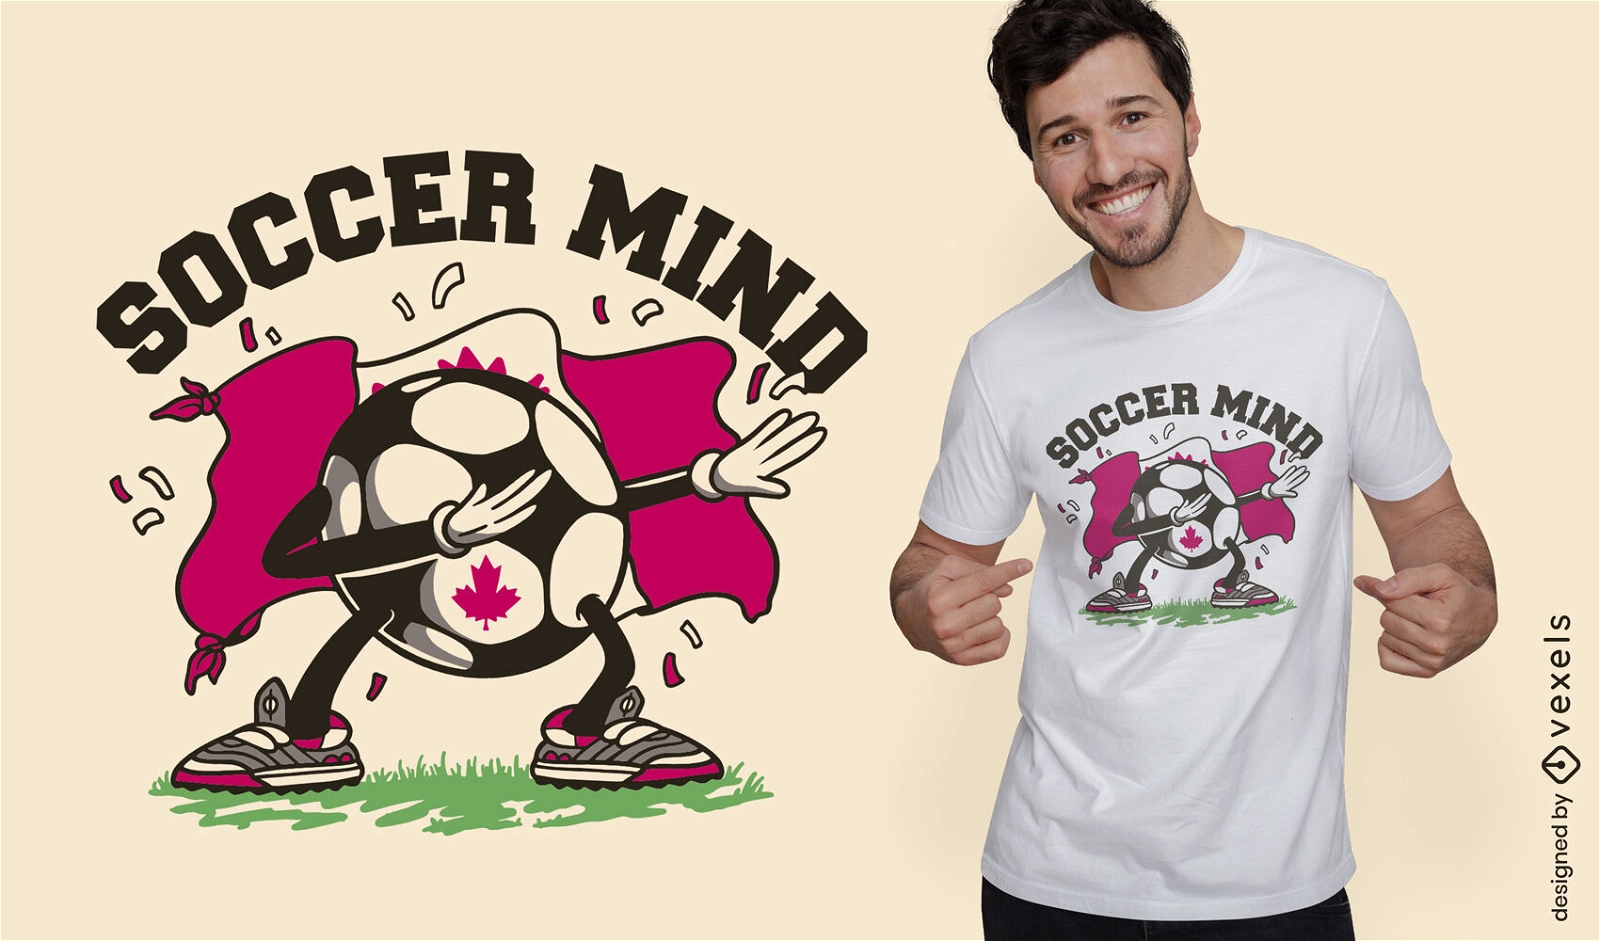 Soccer mind Canada ball dabbing t-shirt design